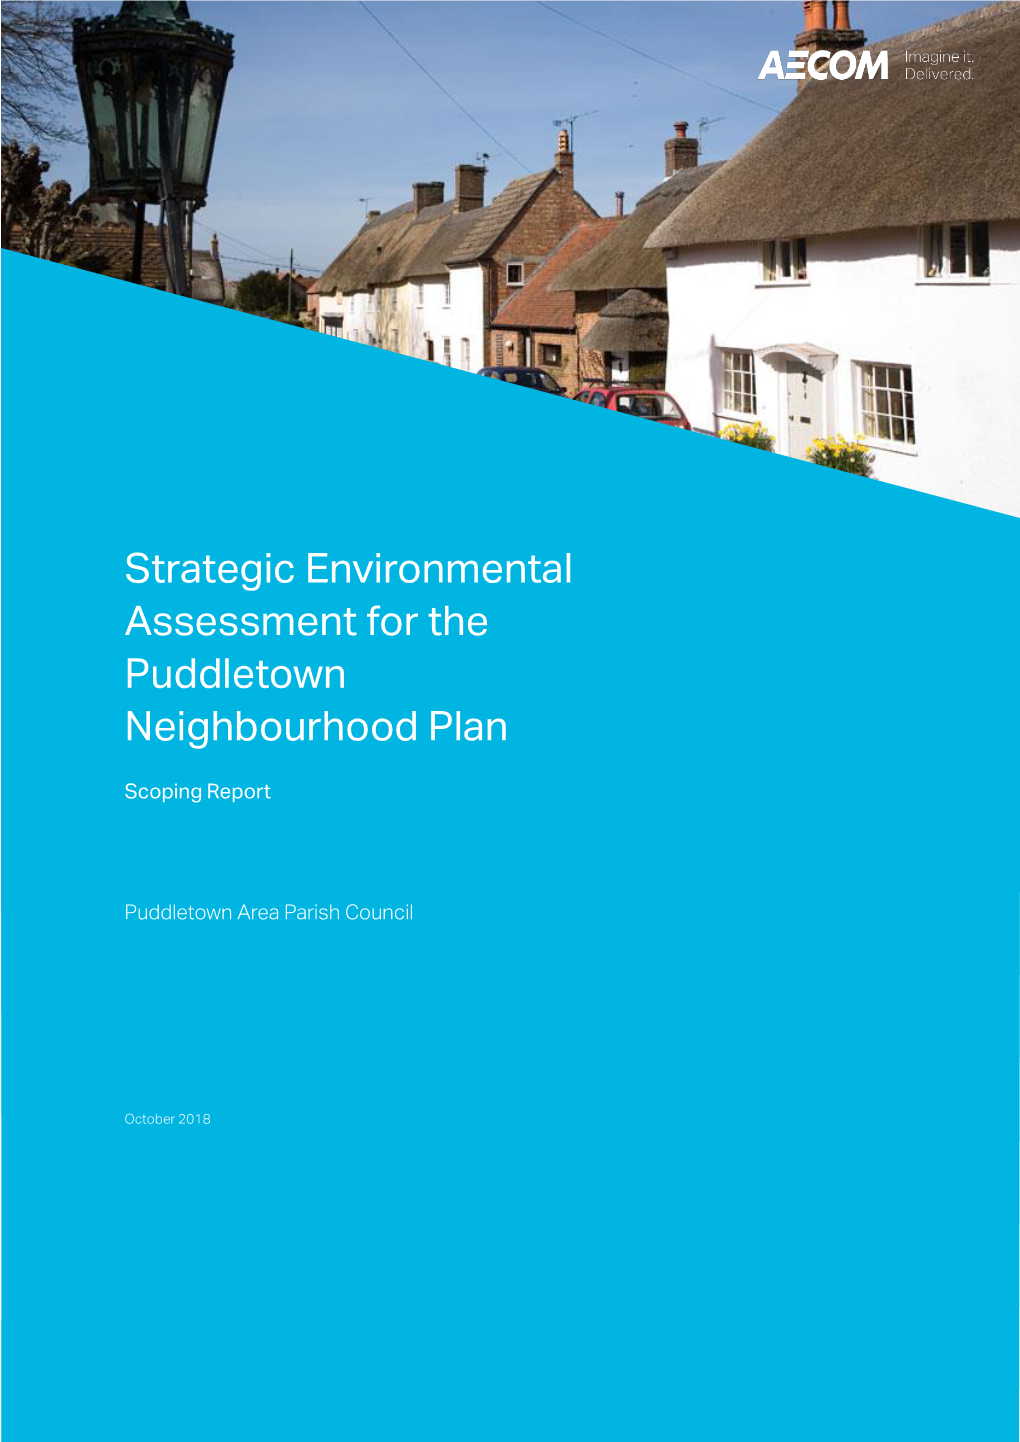 Strategic Environmental Assessment for the Puddletown Neighbourhood Plan